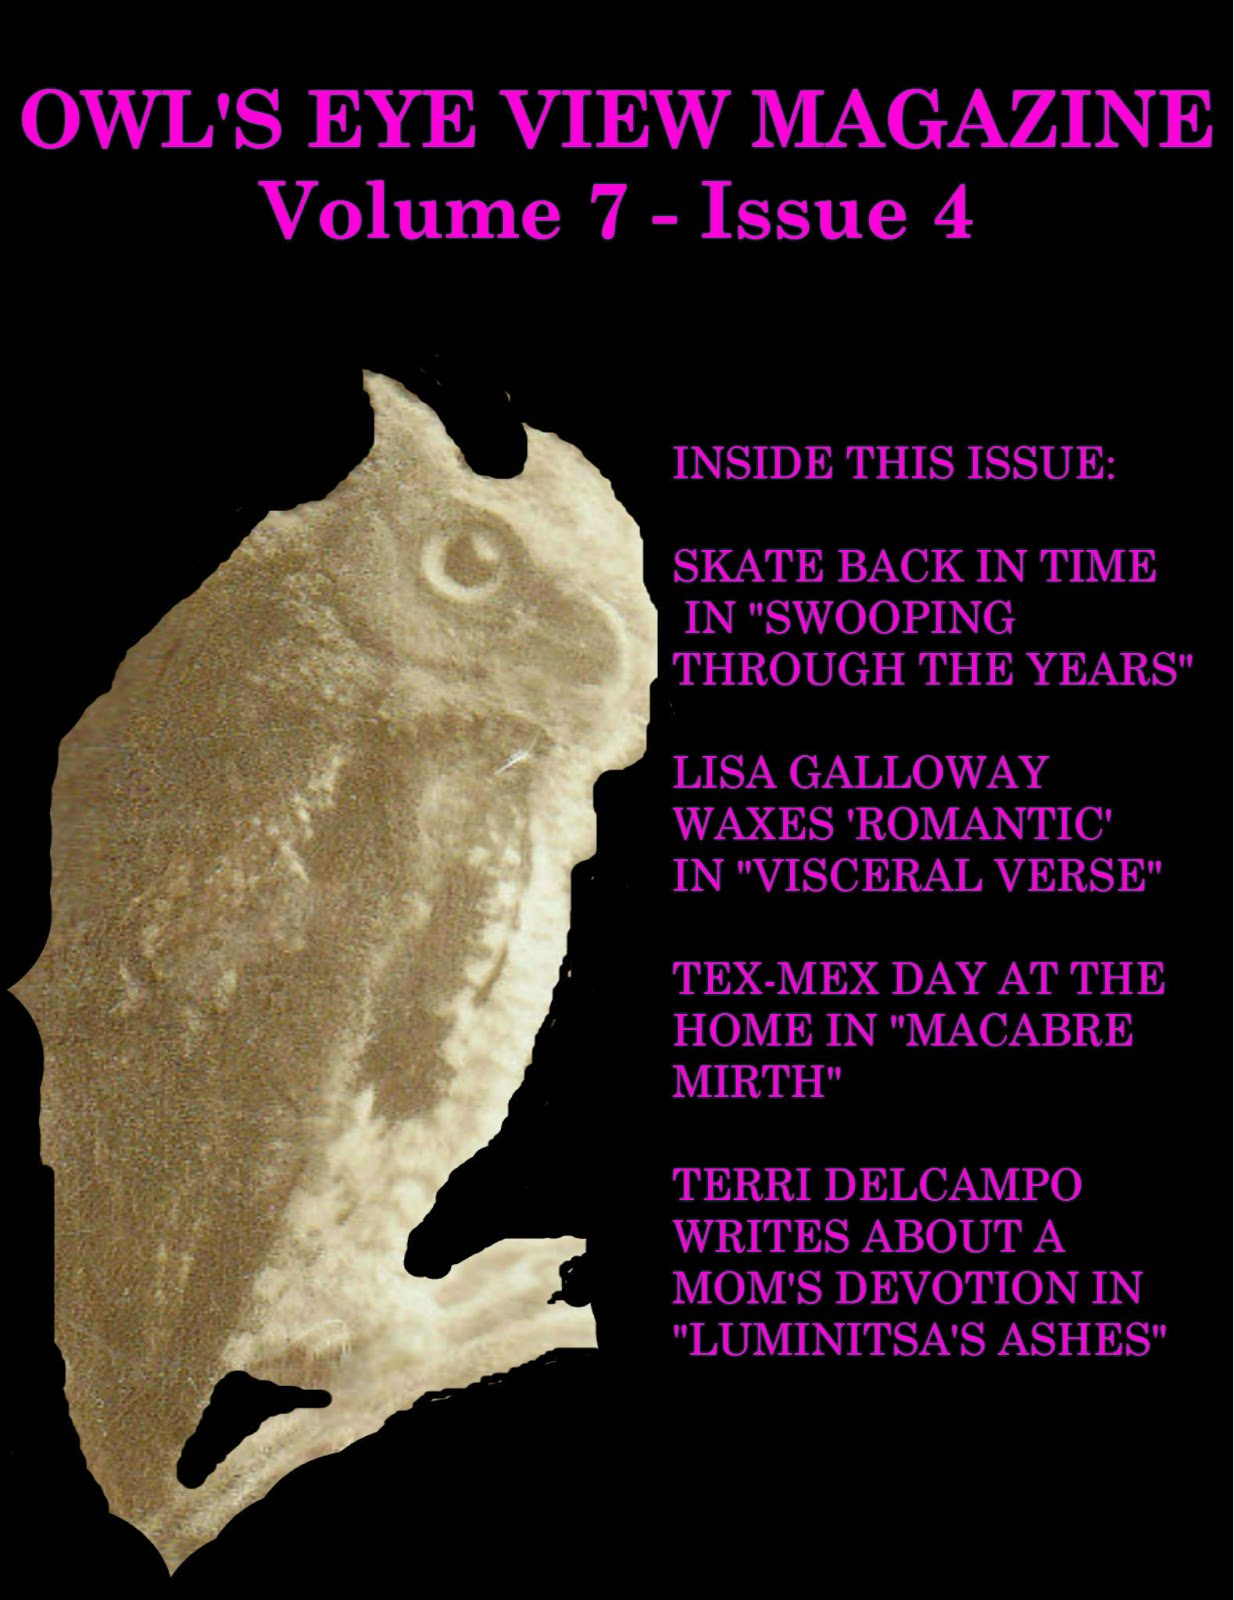 OWL'S EYE VIEW MAGAZINE 2016 ISSUE 4